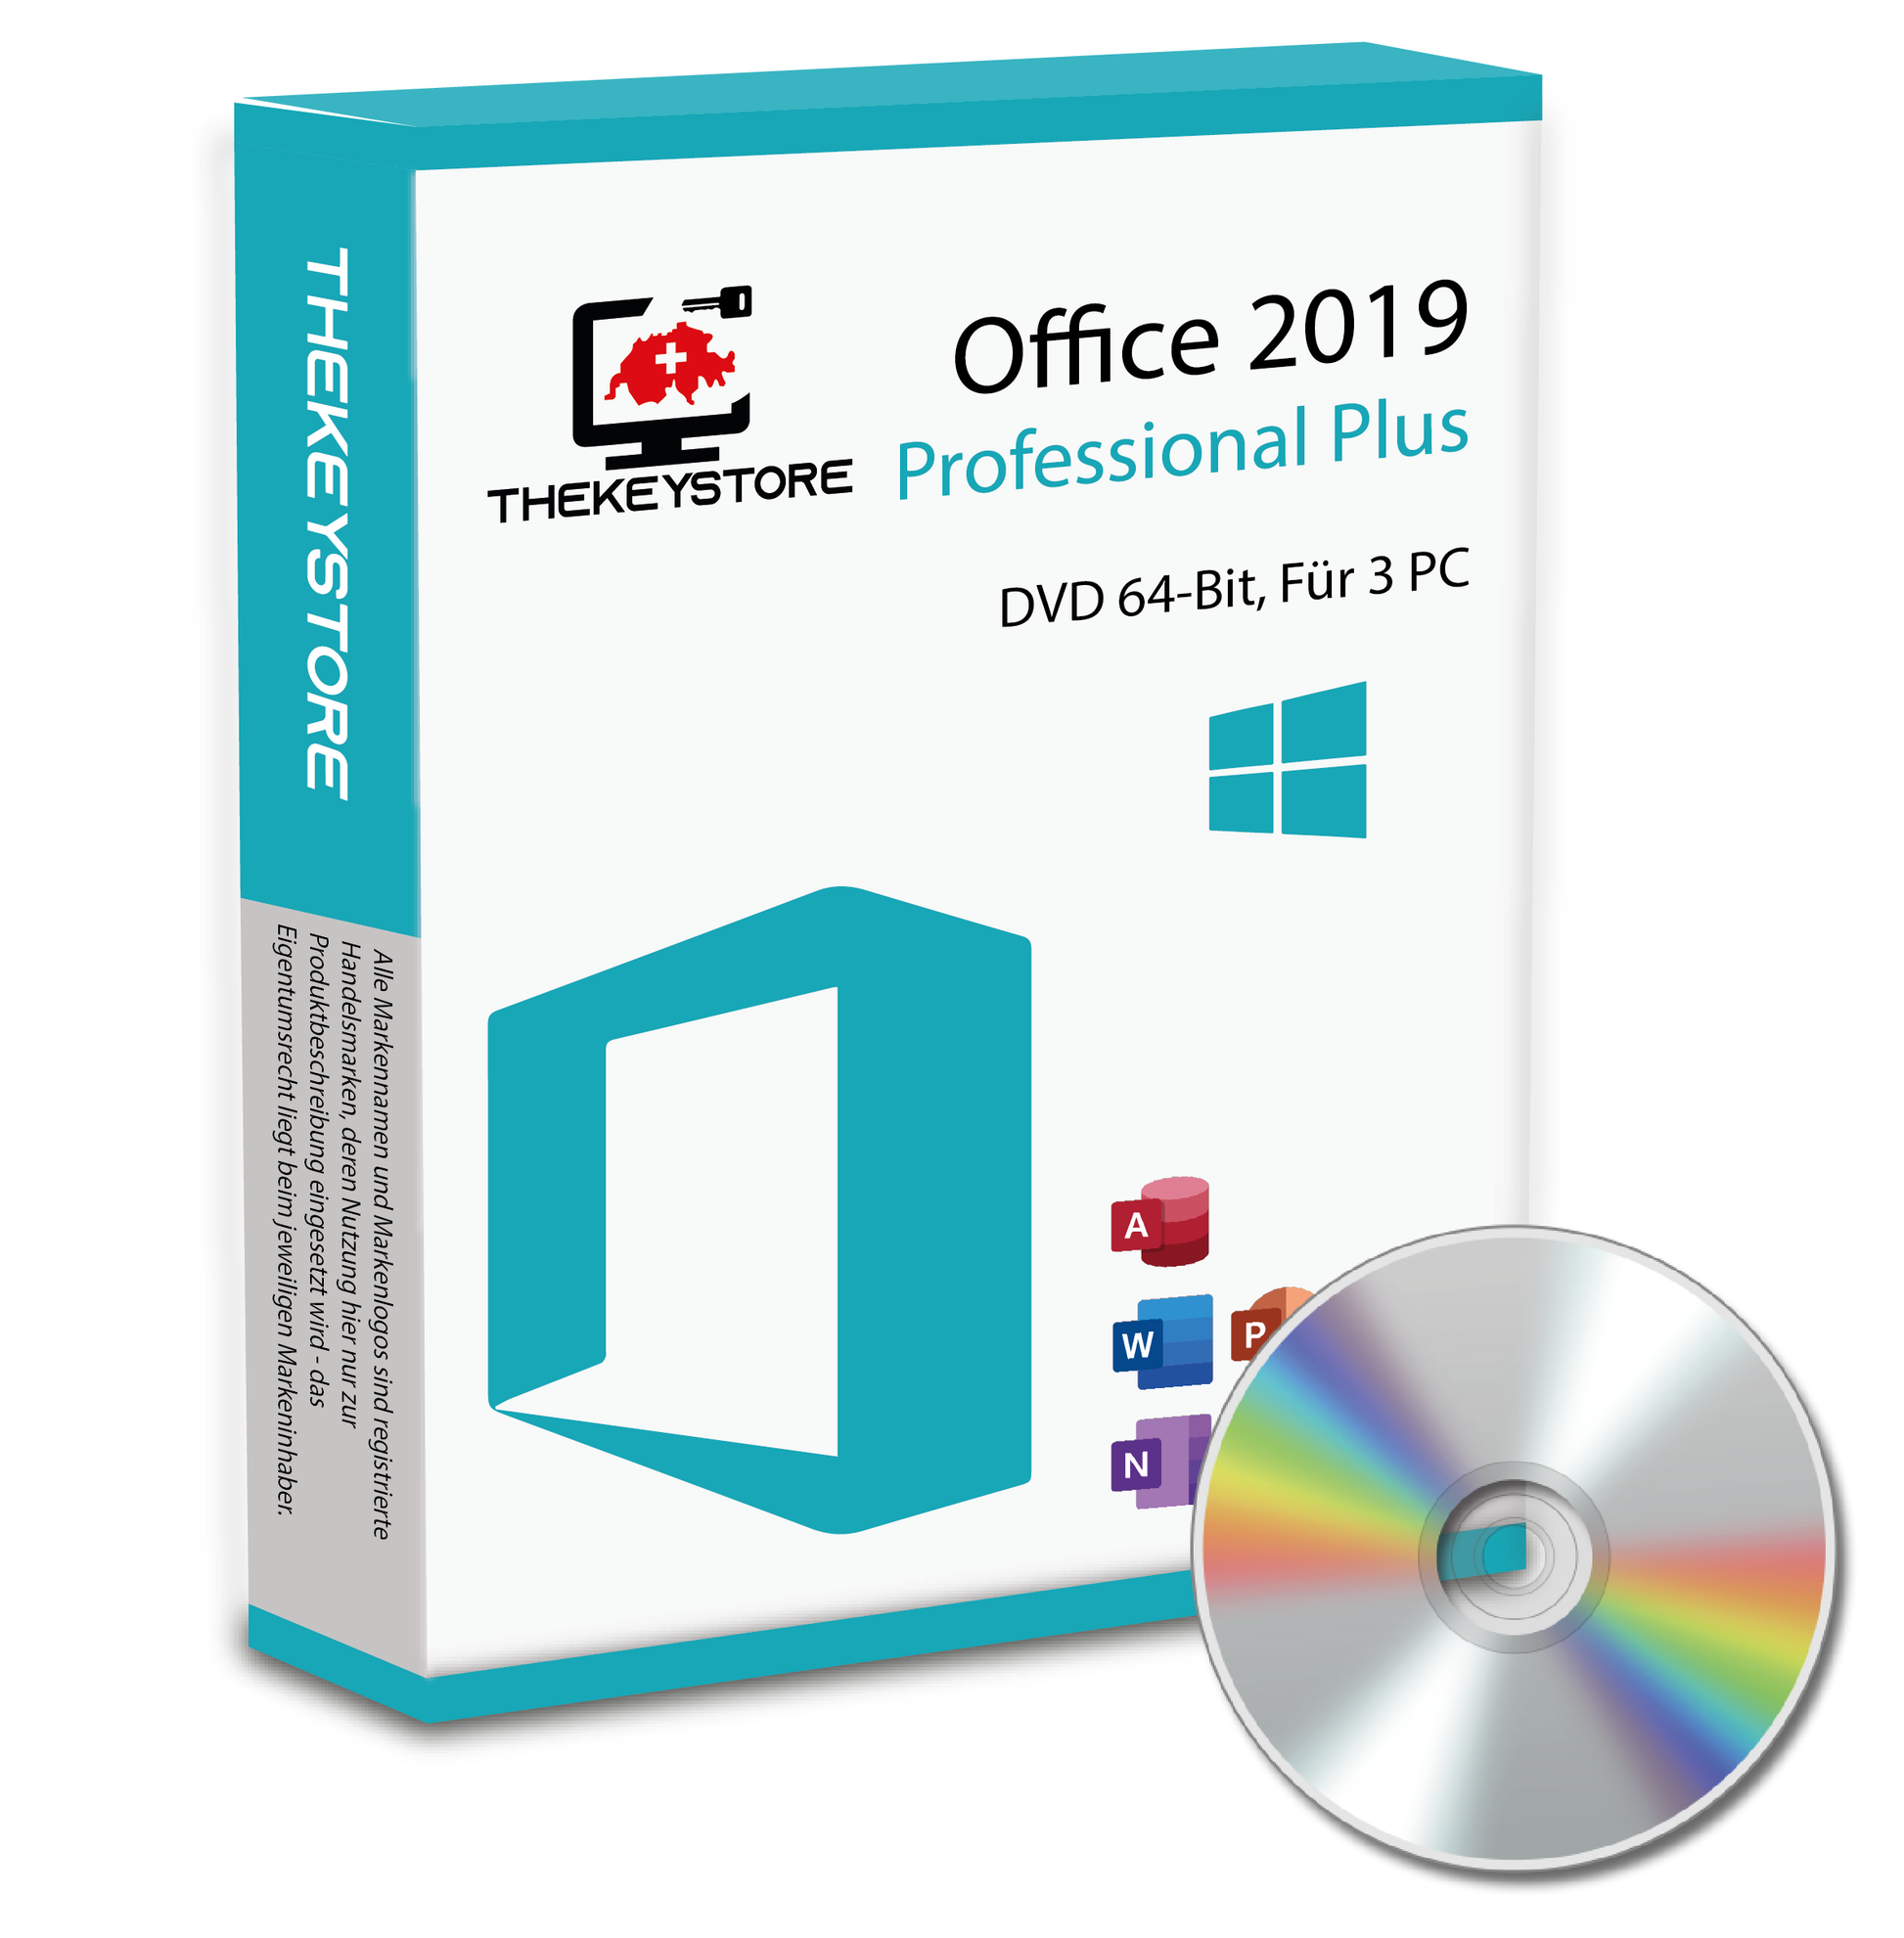 Microsoft Office 2019 Professional Plus - Für 3 PC - TheKeyStore Schweiz